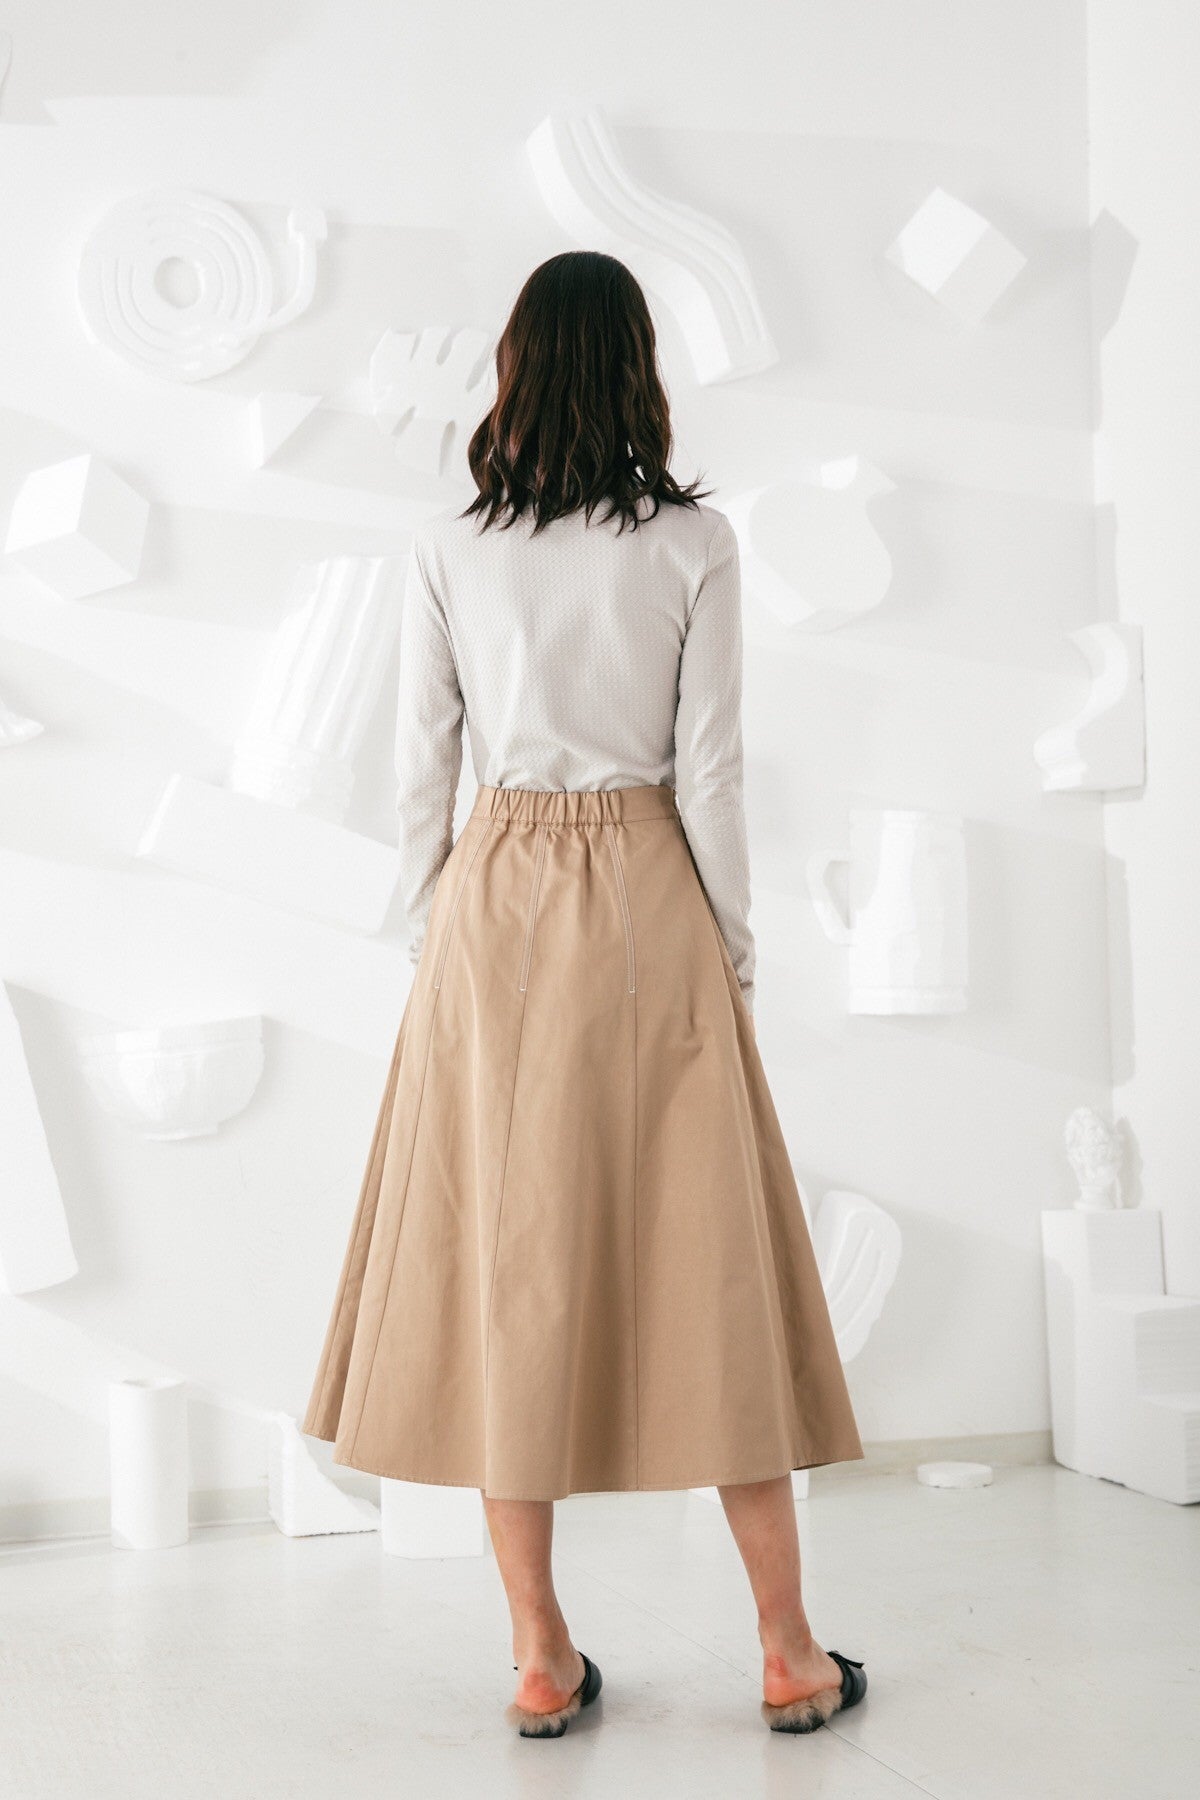 SKYE San Francisco SF shop ethical modern minimalist quality women clothing fashion Jeanne Midi Skirt 4